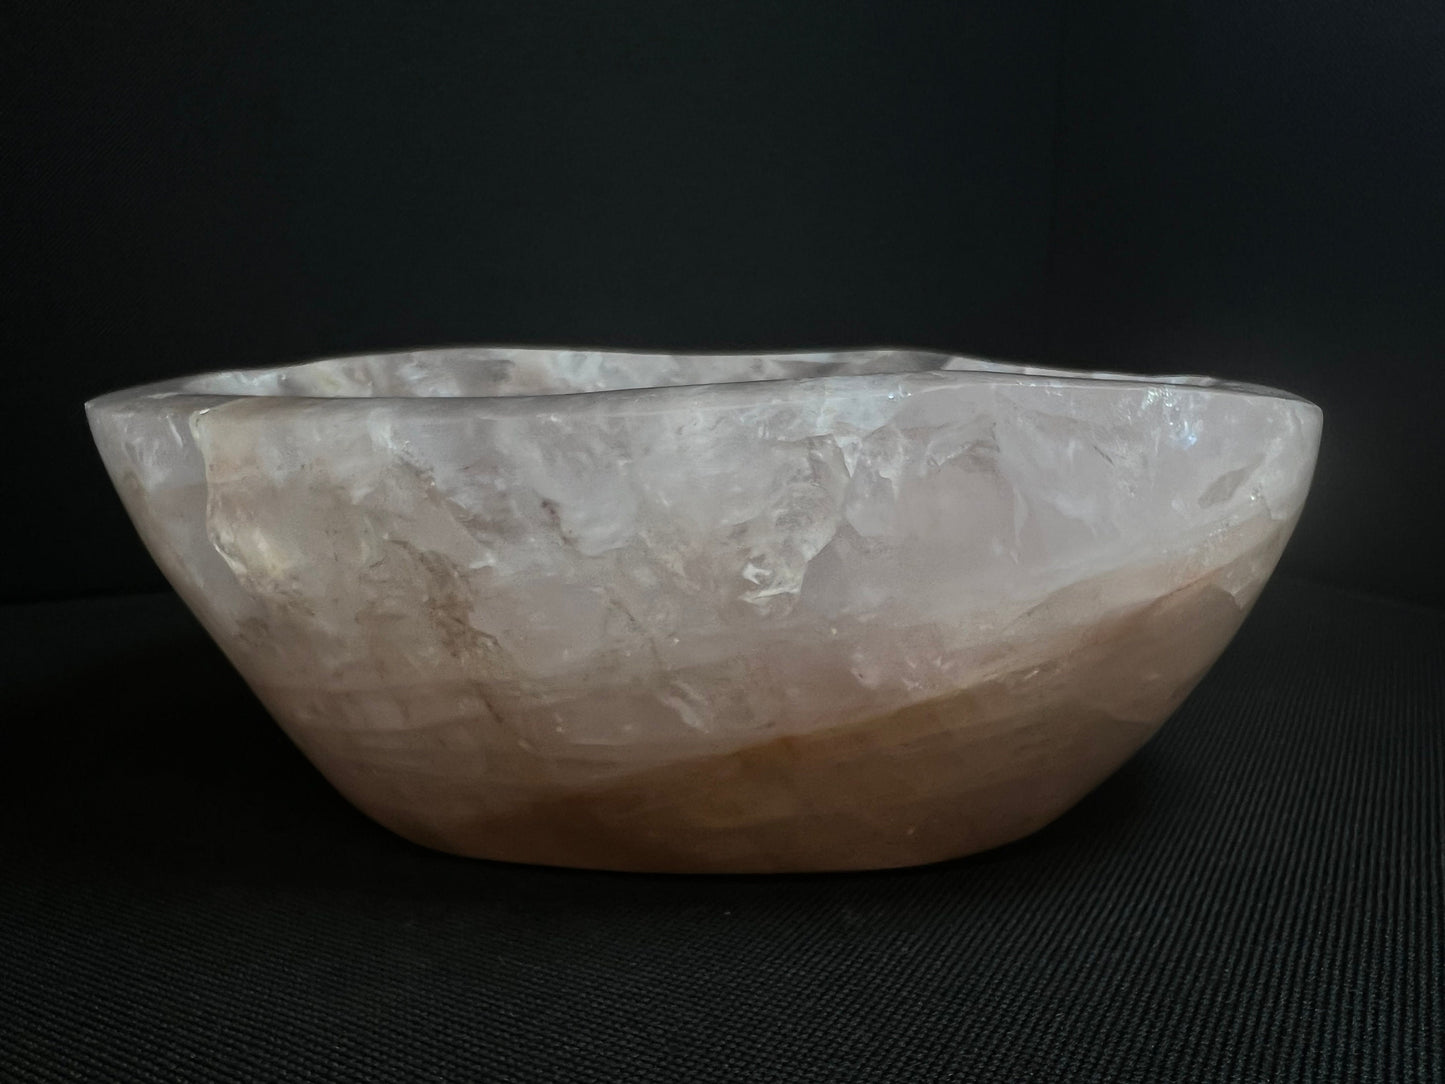 Rose Quartz With Hematite Inclusions Bowl- Home Decor, Statement Piece, Crystal